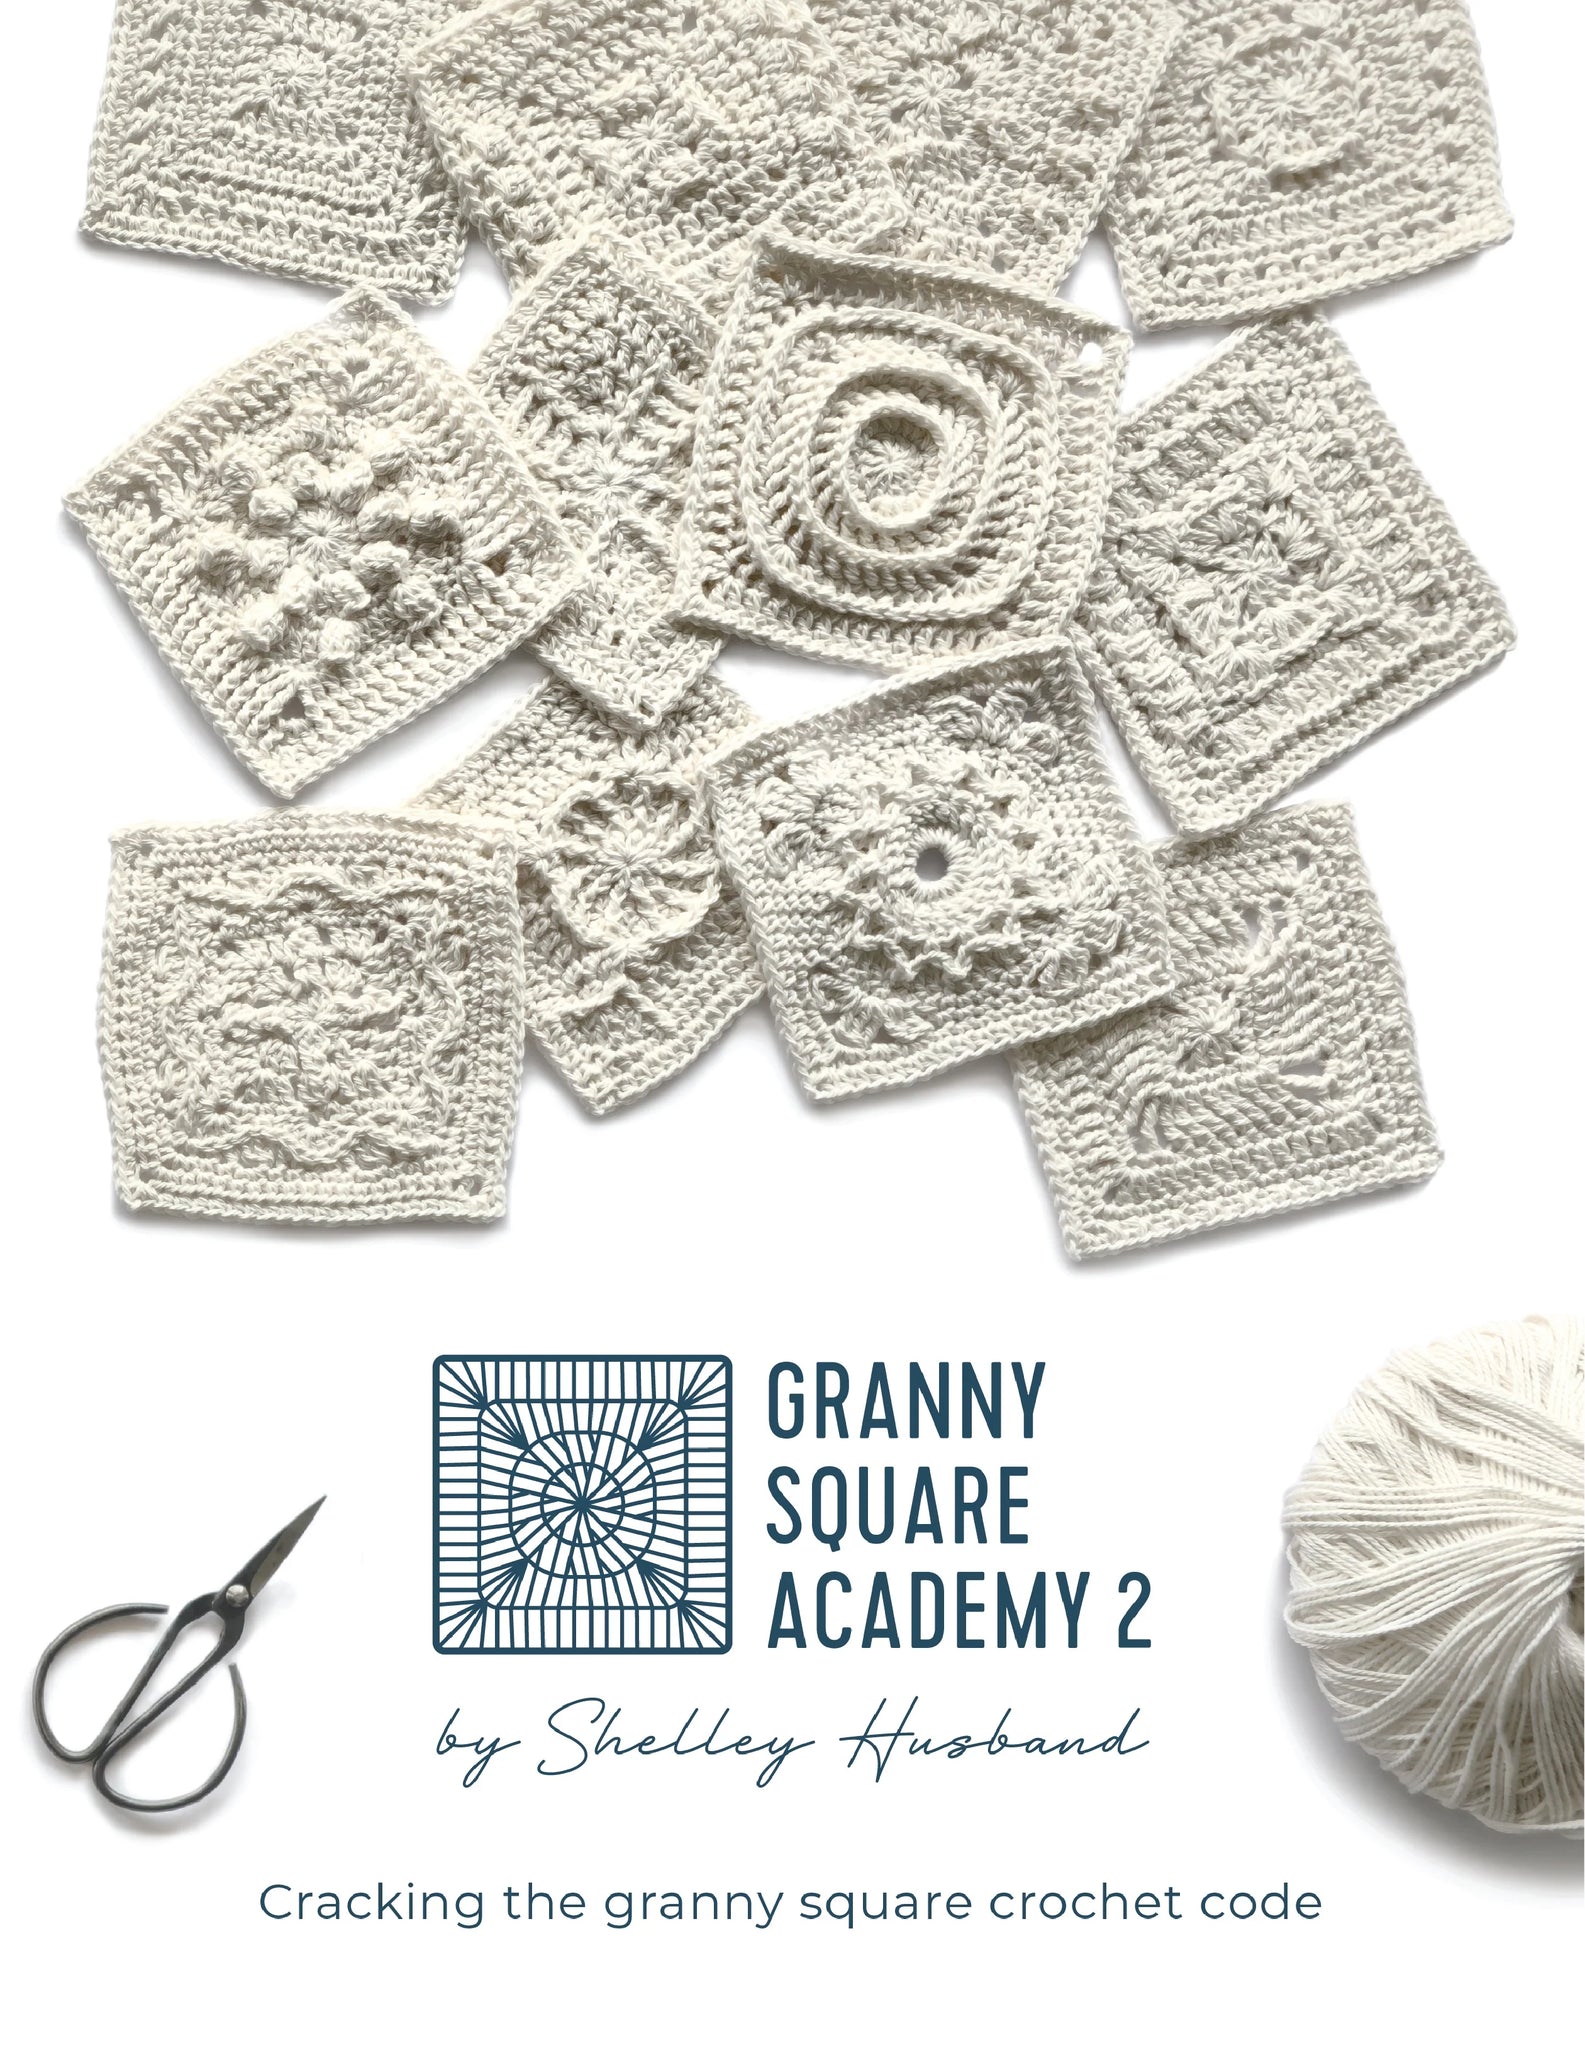 Granny Square Academy 2